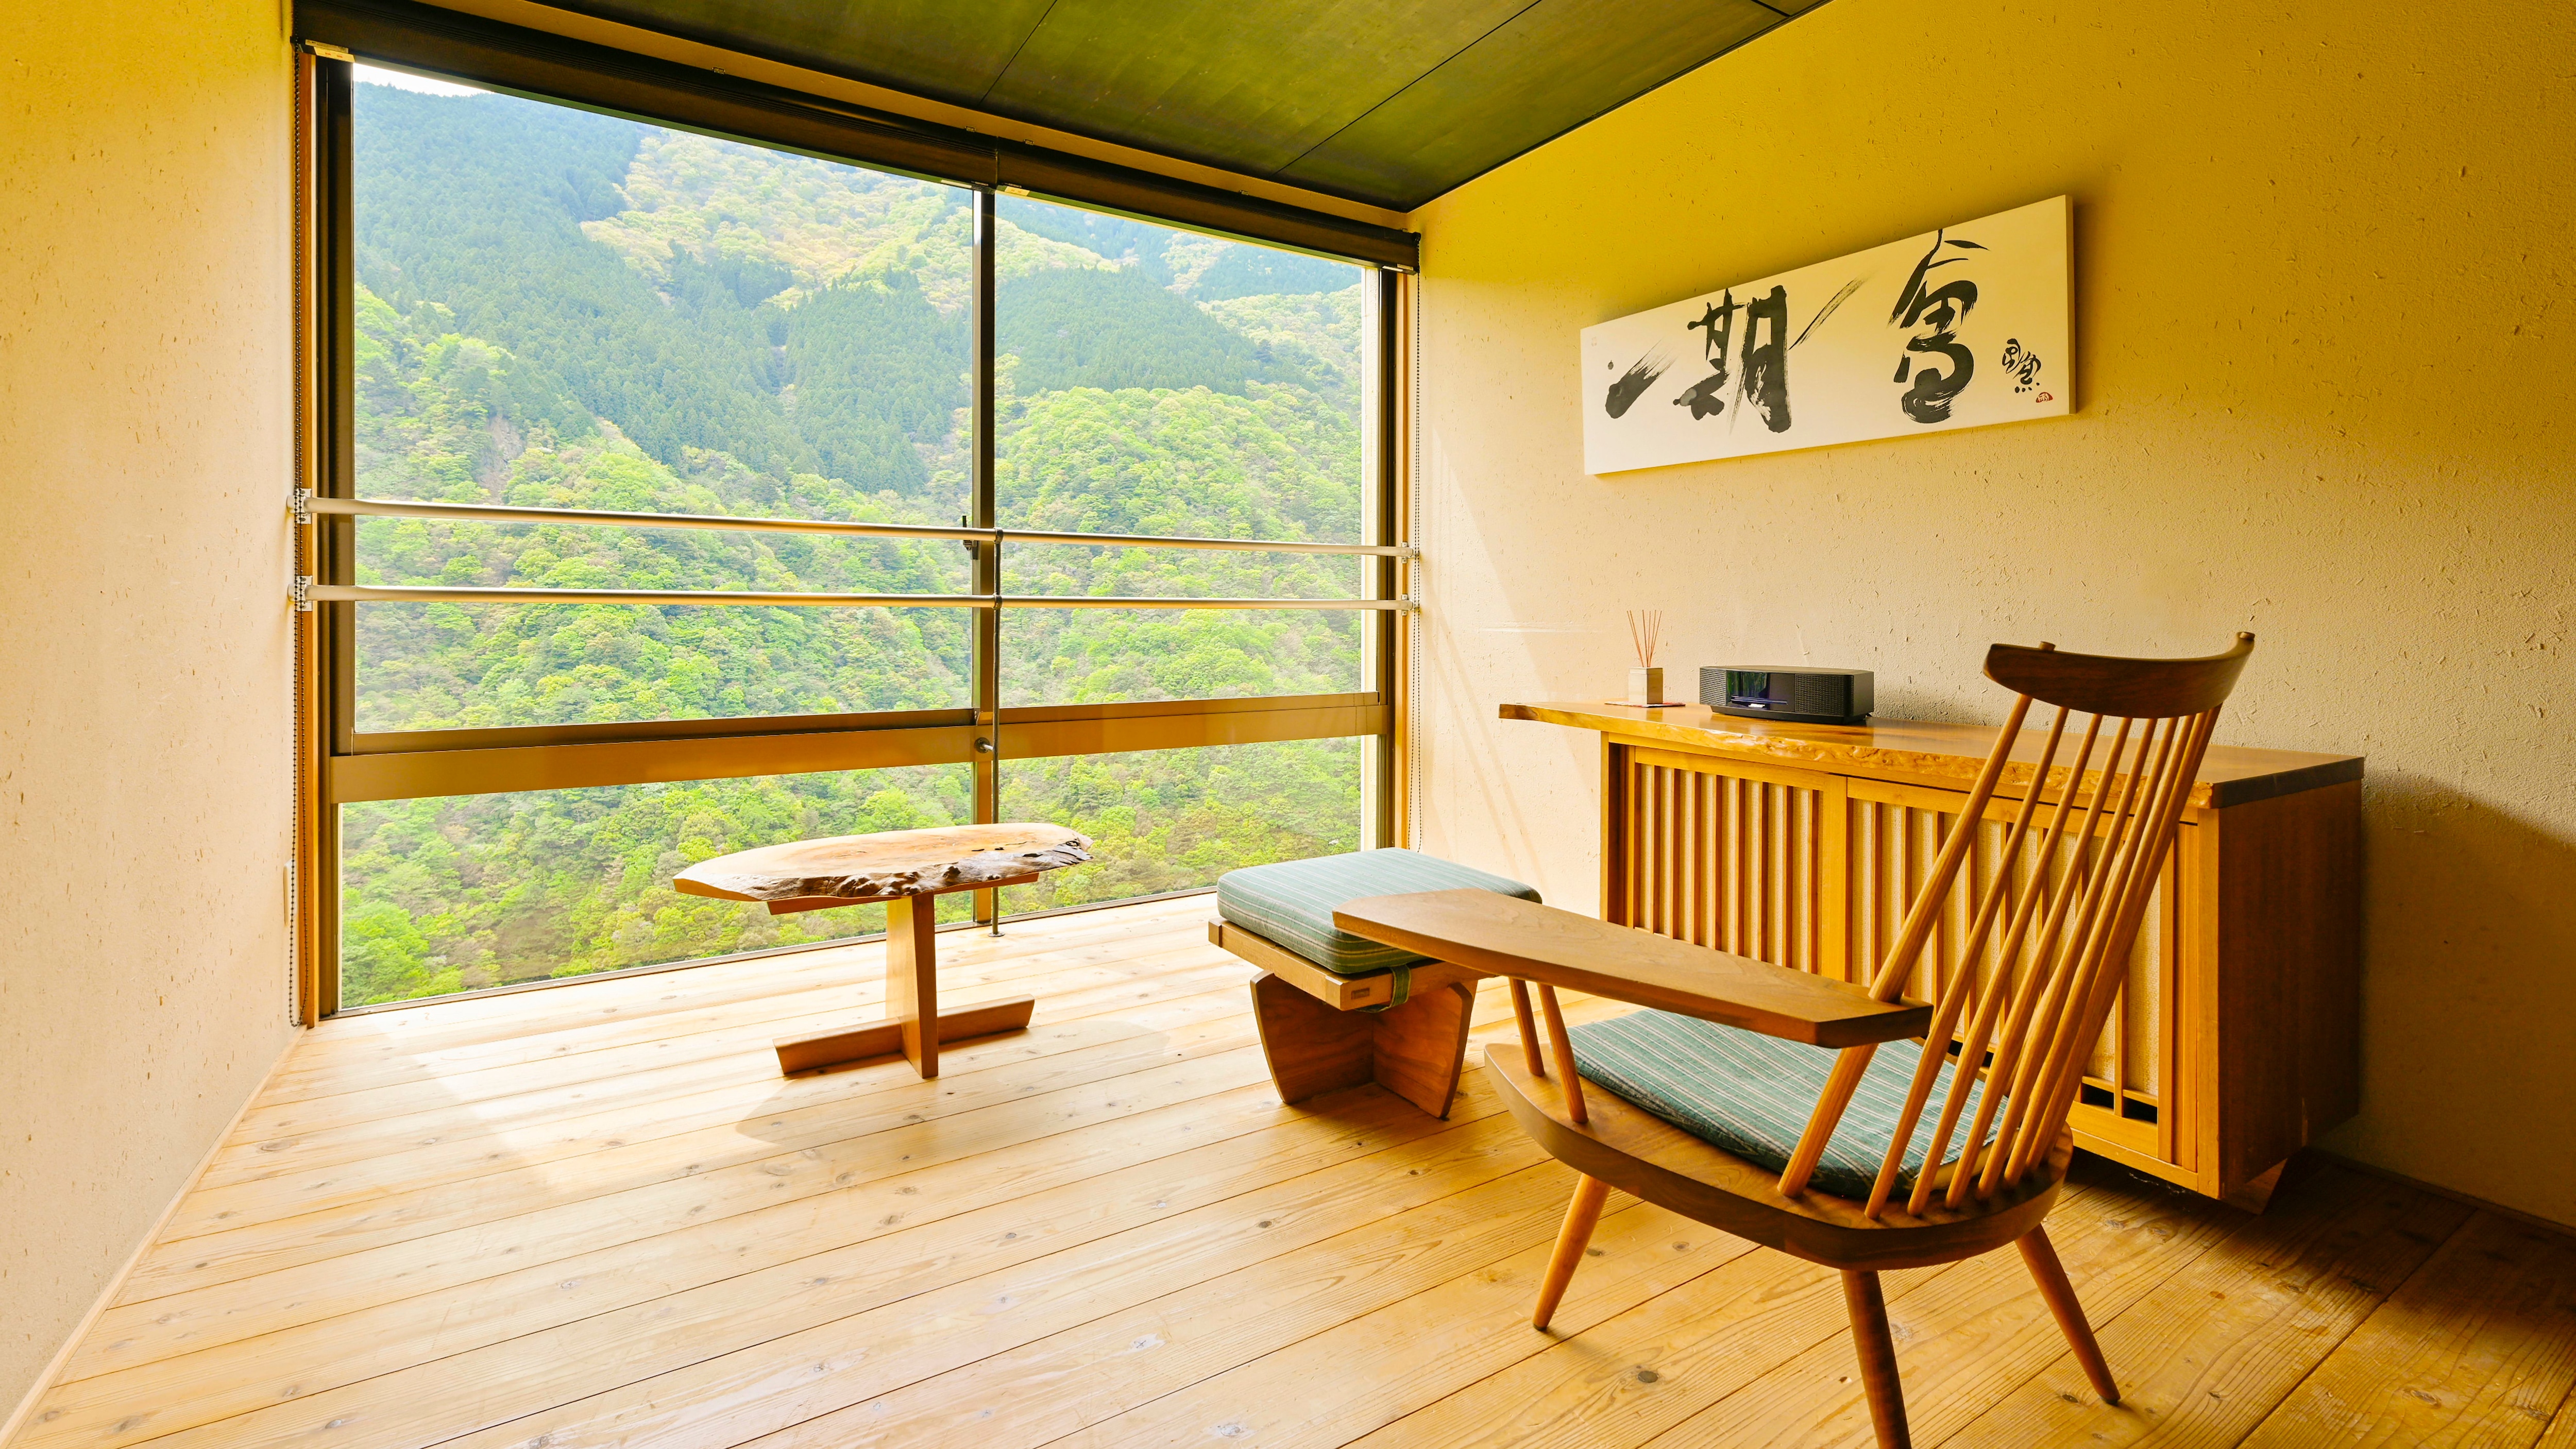 ■ Guest room with open-air bath footbath Tamaki ■ George Nakashima lounge chair